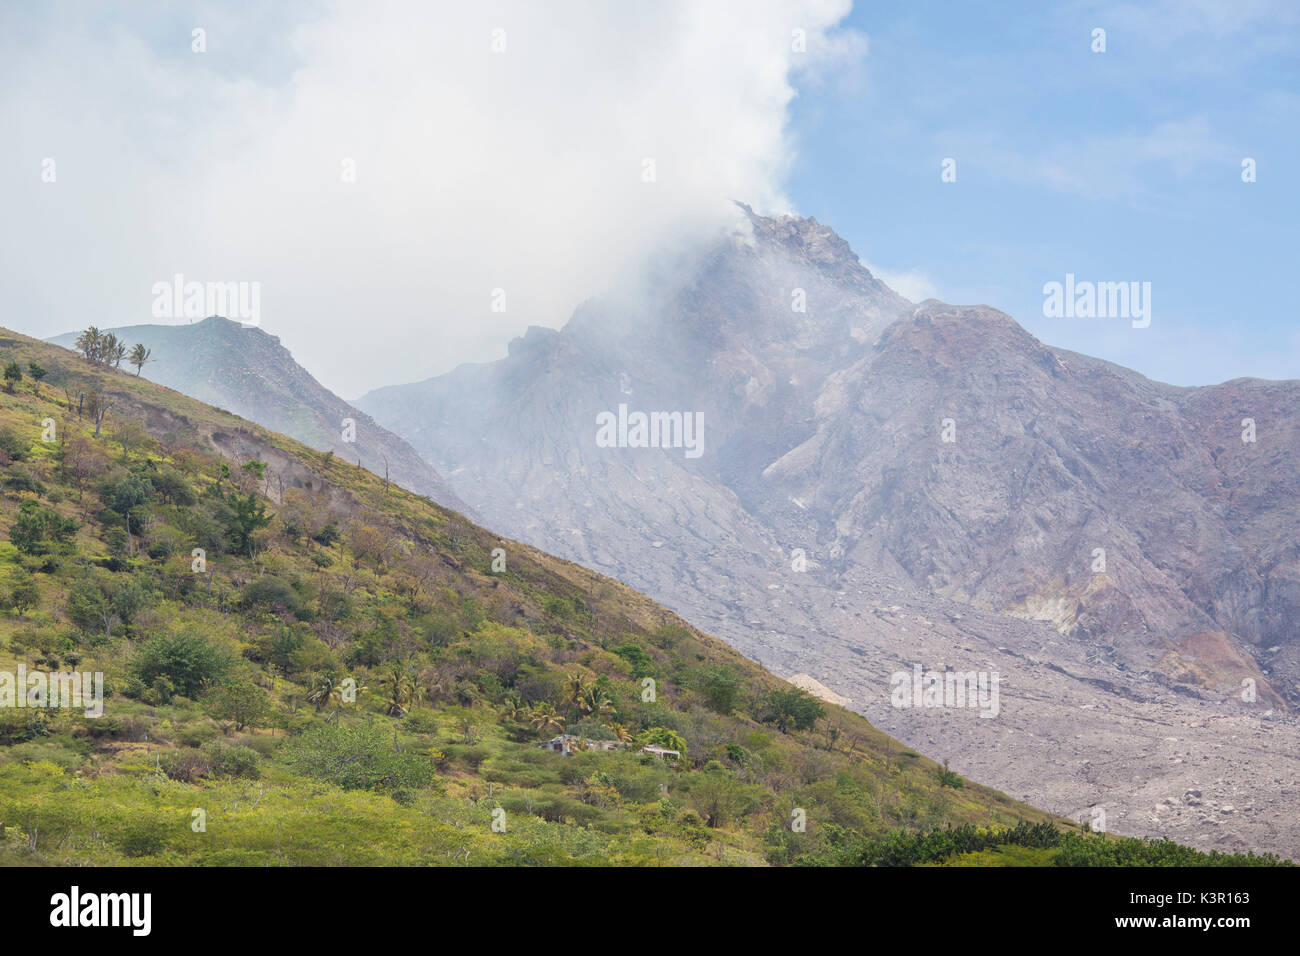 Haze rund um den Gipfel des Soufrière Hills Vulkan Montserrat Karibik Leeward Inseln der Kleinen Antillen Stockfoto